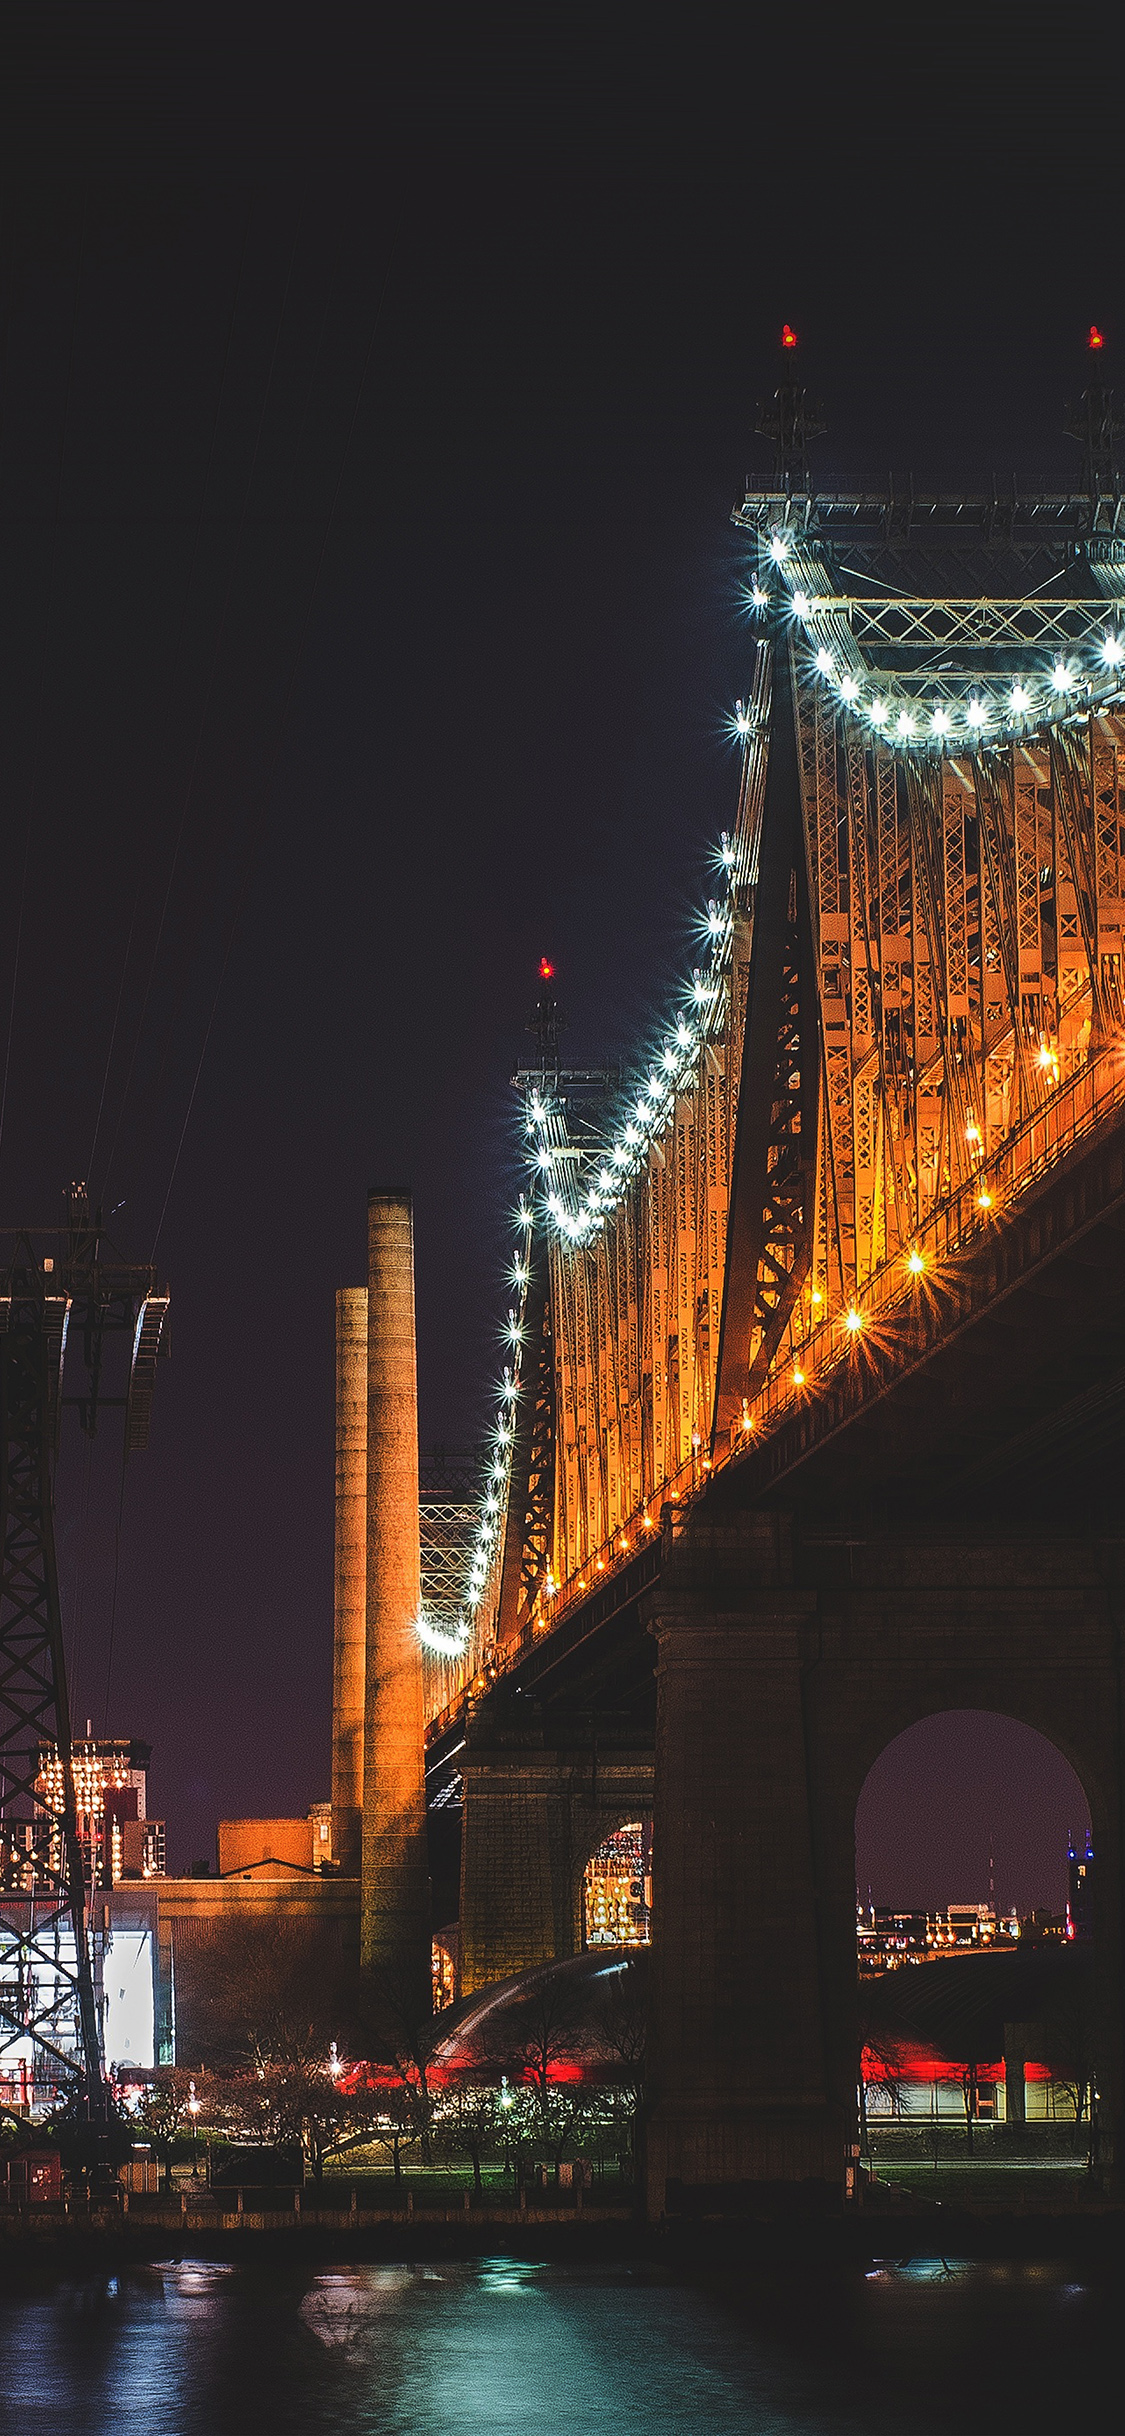 iPhone X wallpaper. bridge night river city lights orange